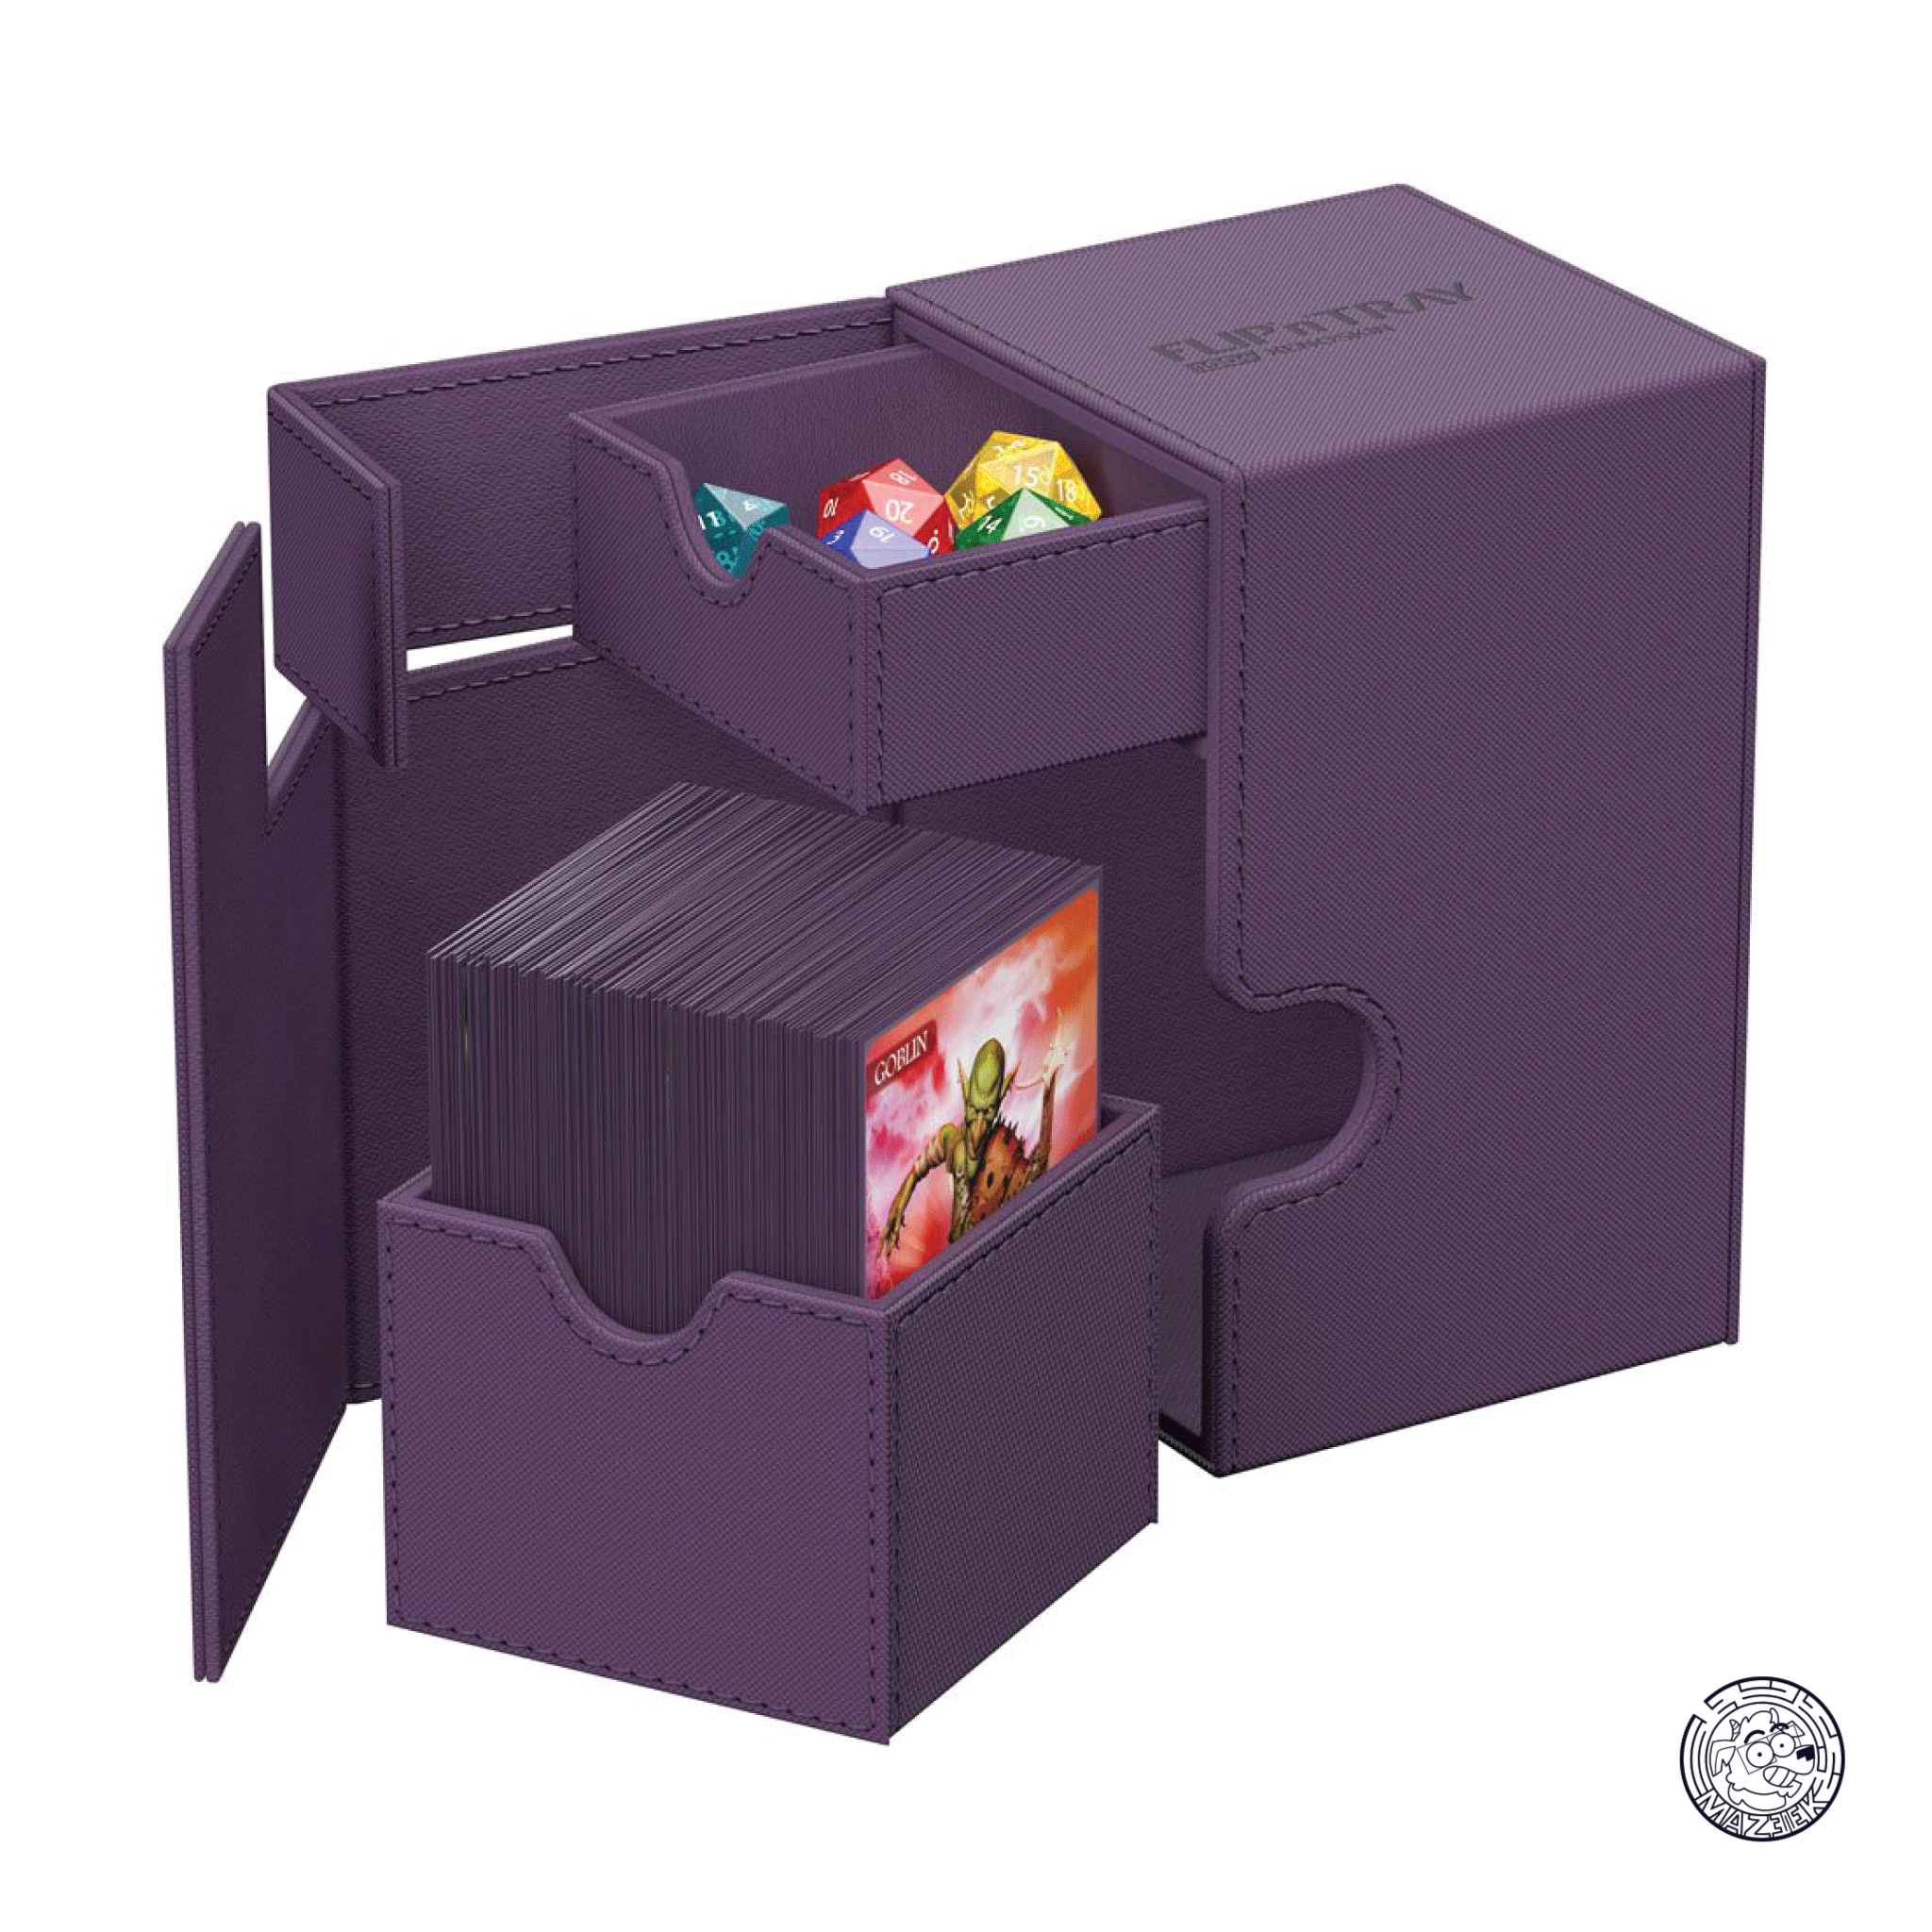 Ultimate Guard - Flip`n`Tray 100+ XenoSkin Monocolor (Purple)